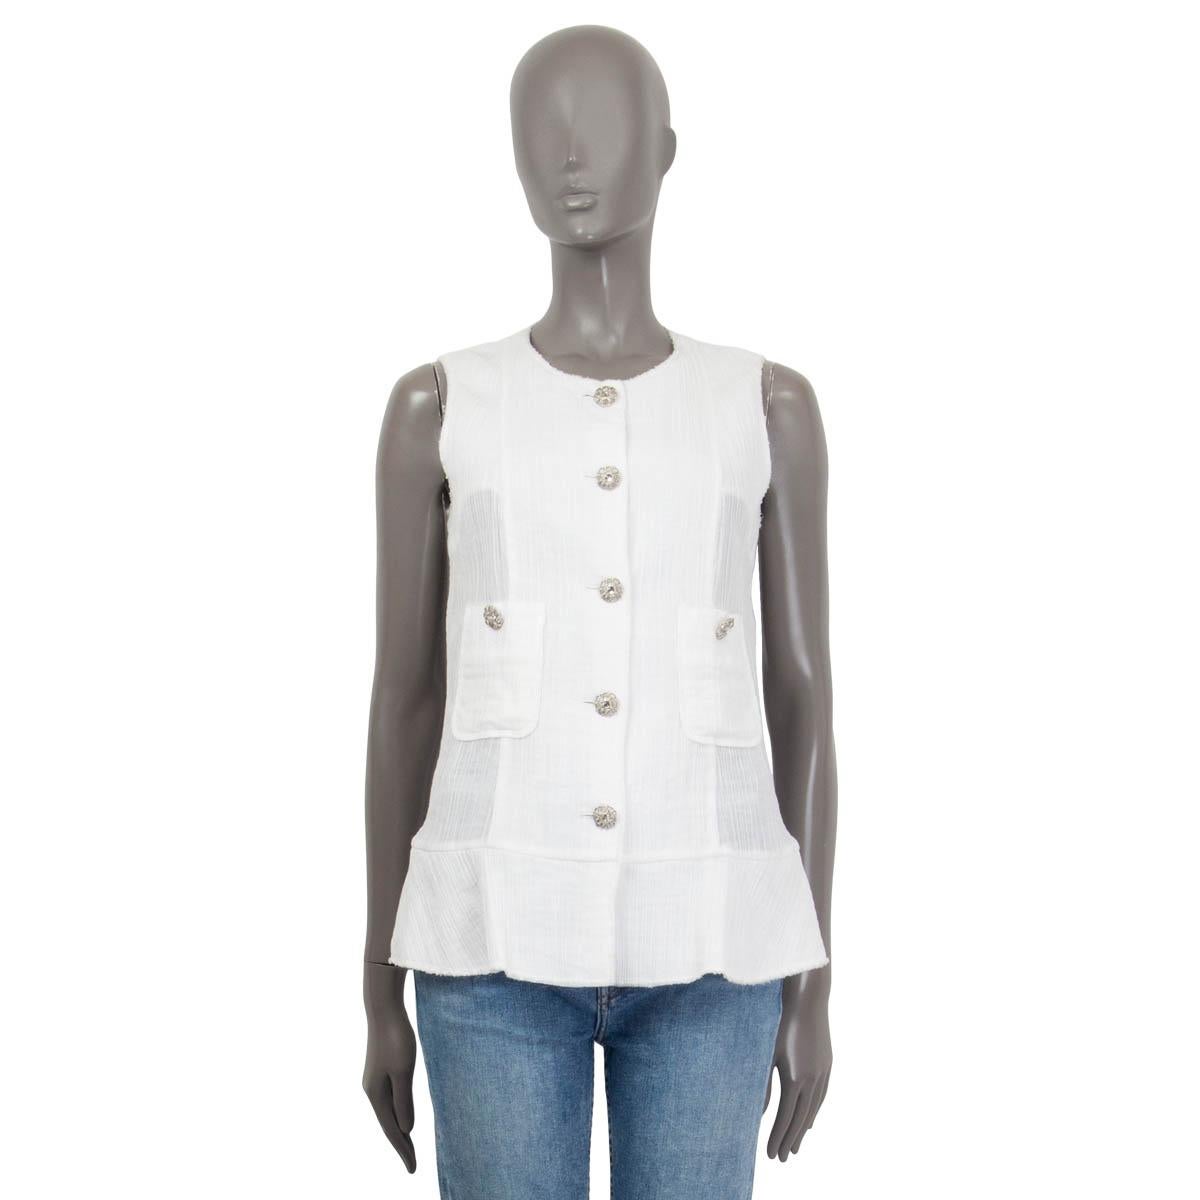 Gray CHANEL white cotton 2012 CRINKLED Sleeveless Blouse Shirt 42 L